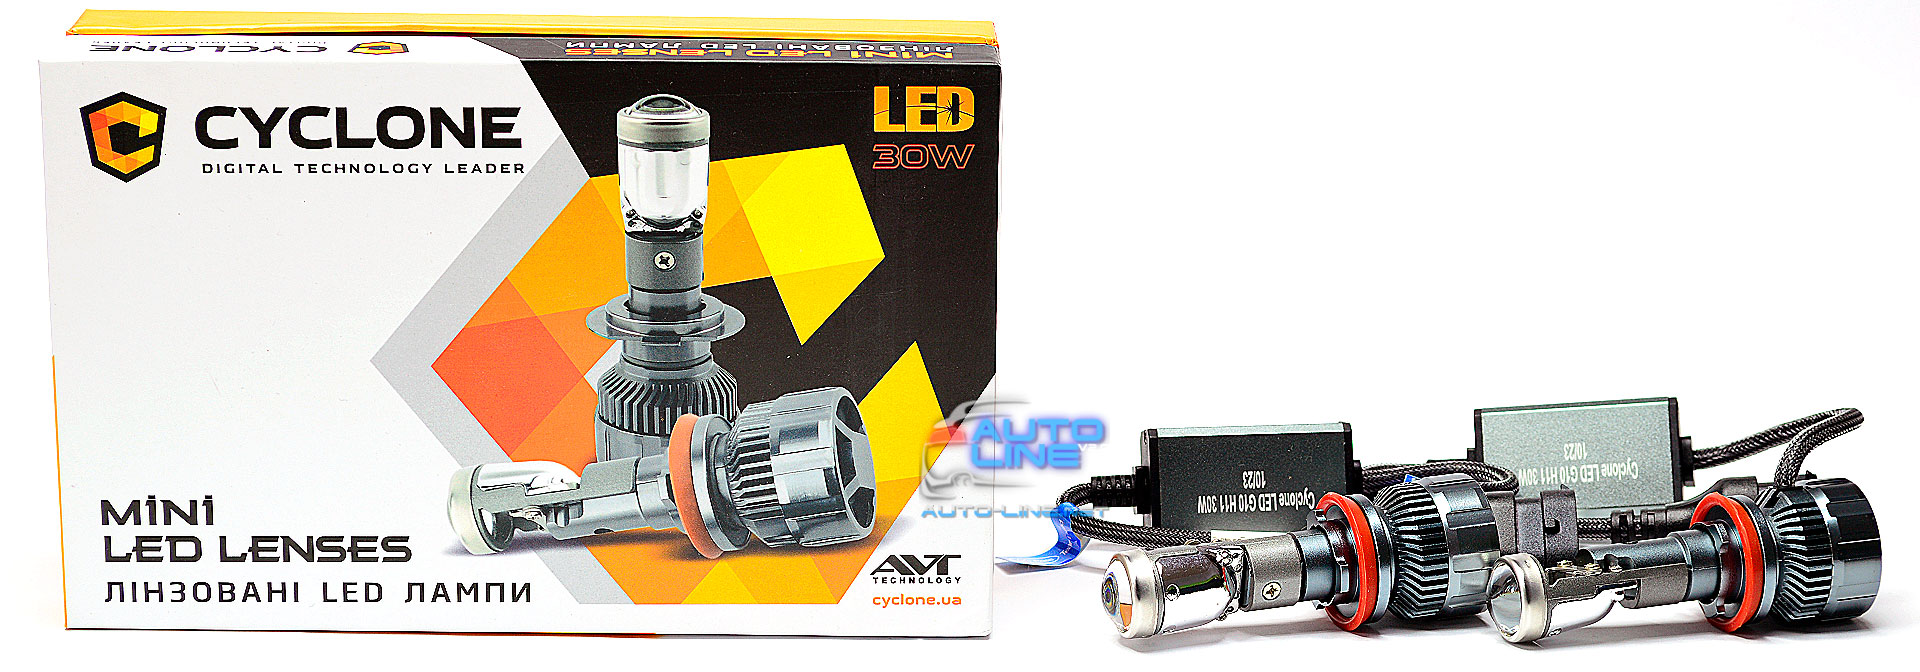 Cyclone LED G10 H11 30W - міні LED-лінза H11 Bi-Led, світлодіодна лампа-лінза H11